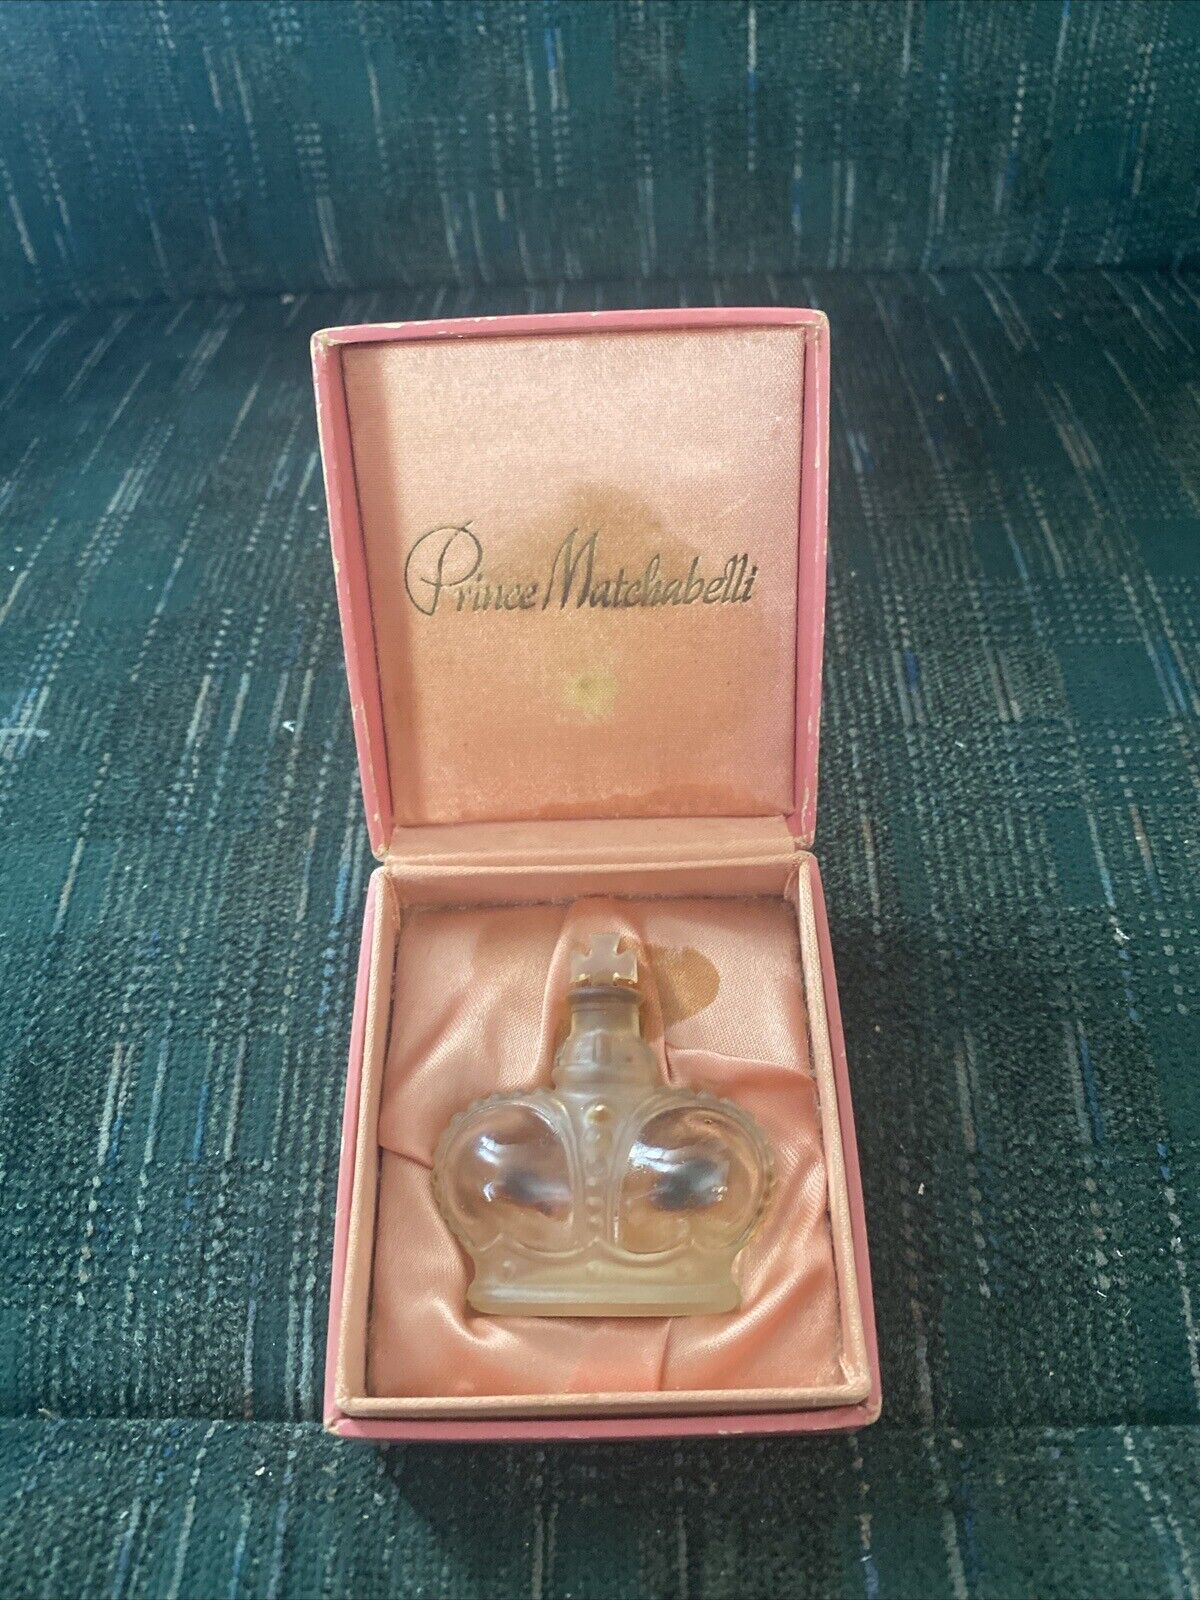 Prince Matchabelli Stradivari 50's Antique USA Vintage Perfume Bottle